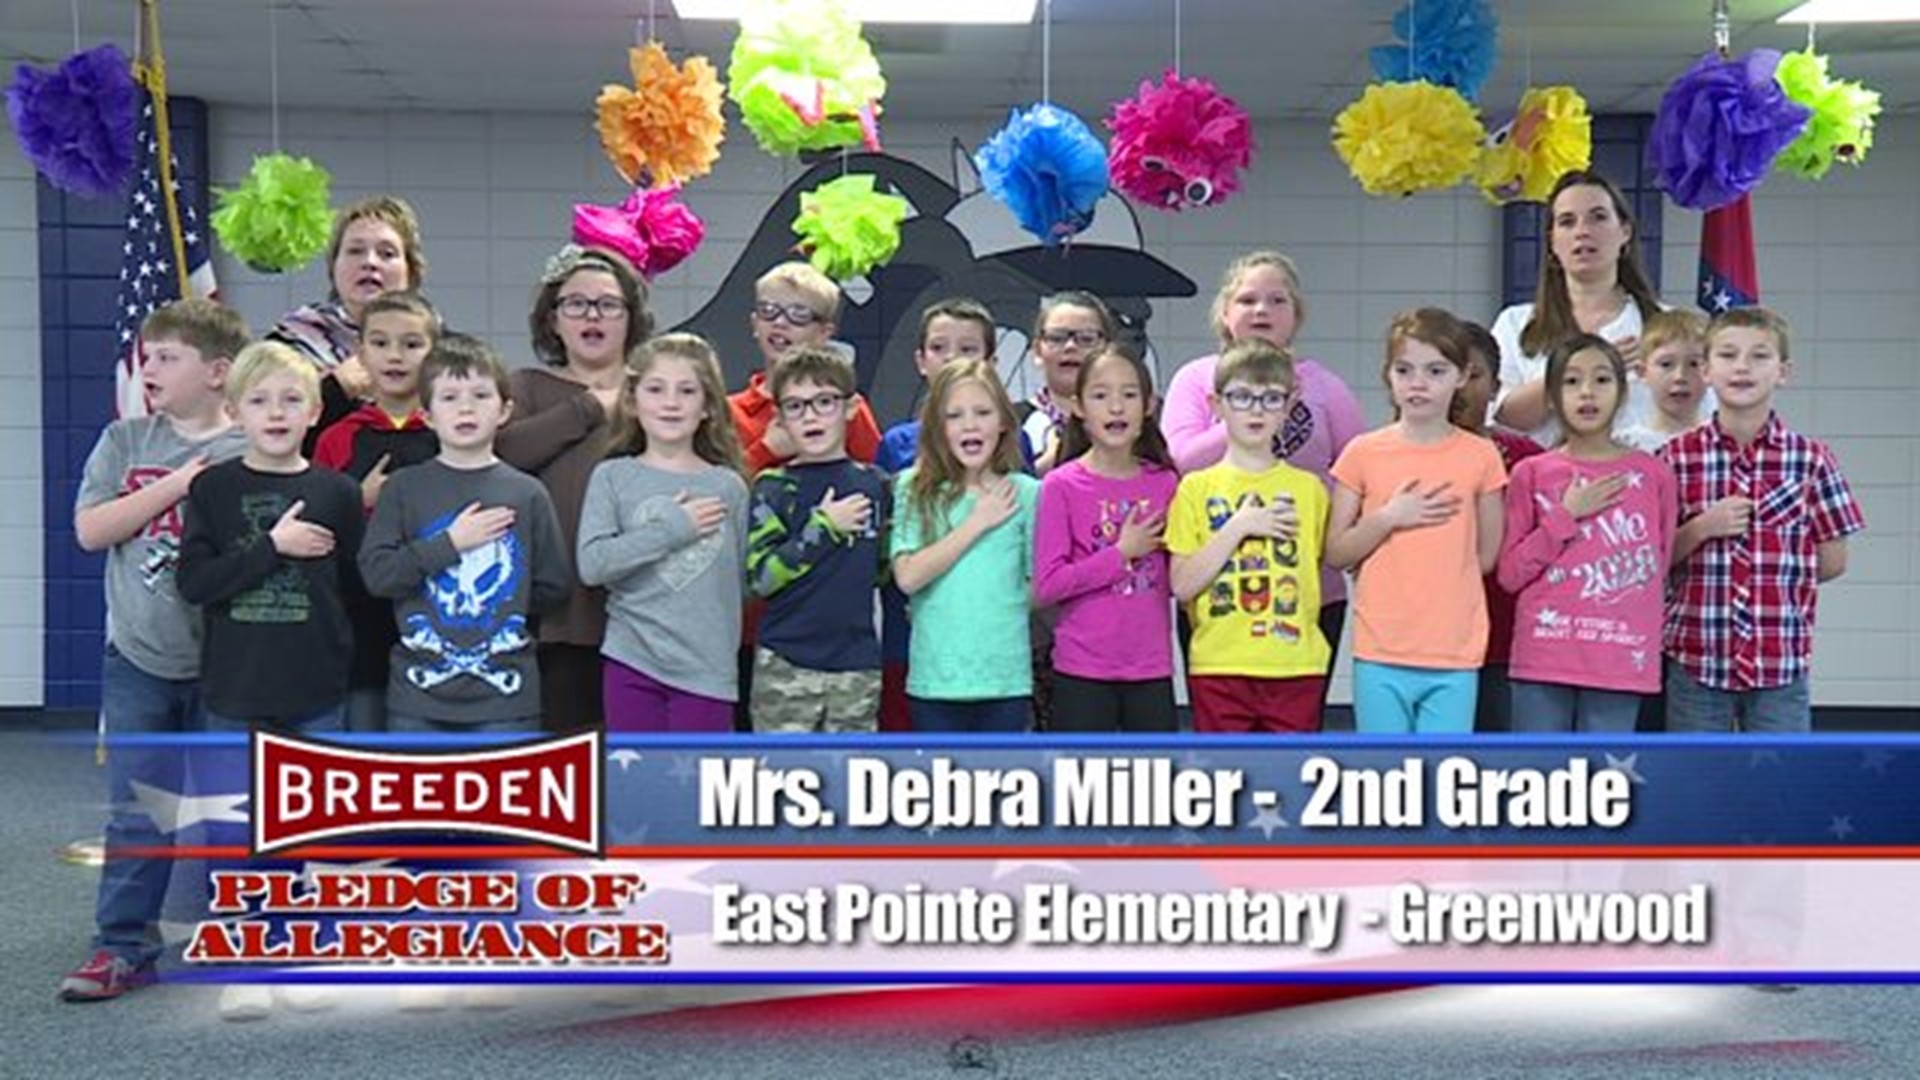 East Pointe Elementary - Greenwood, Mrs. Miller - Second Grade